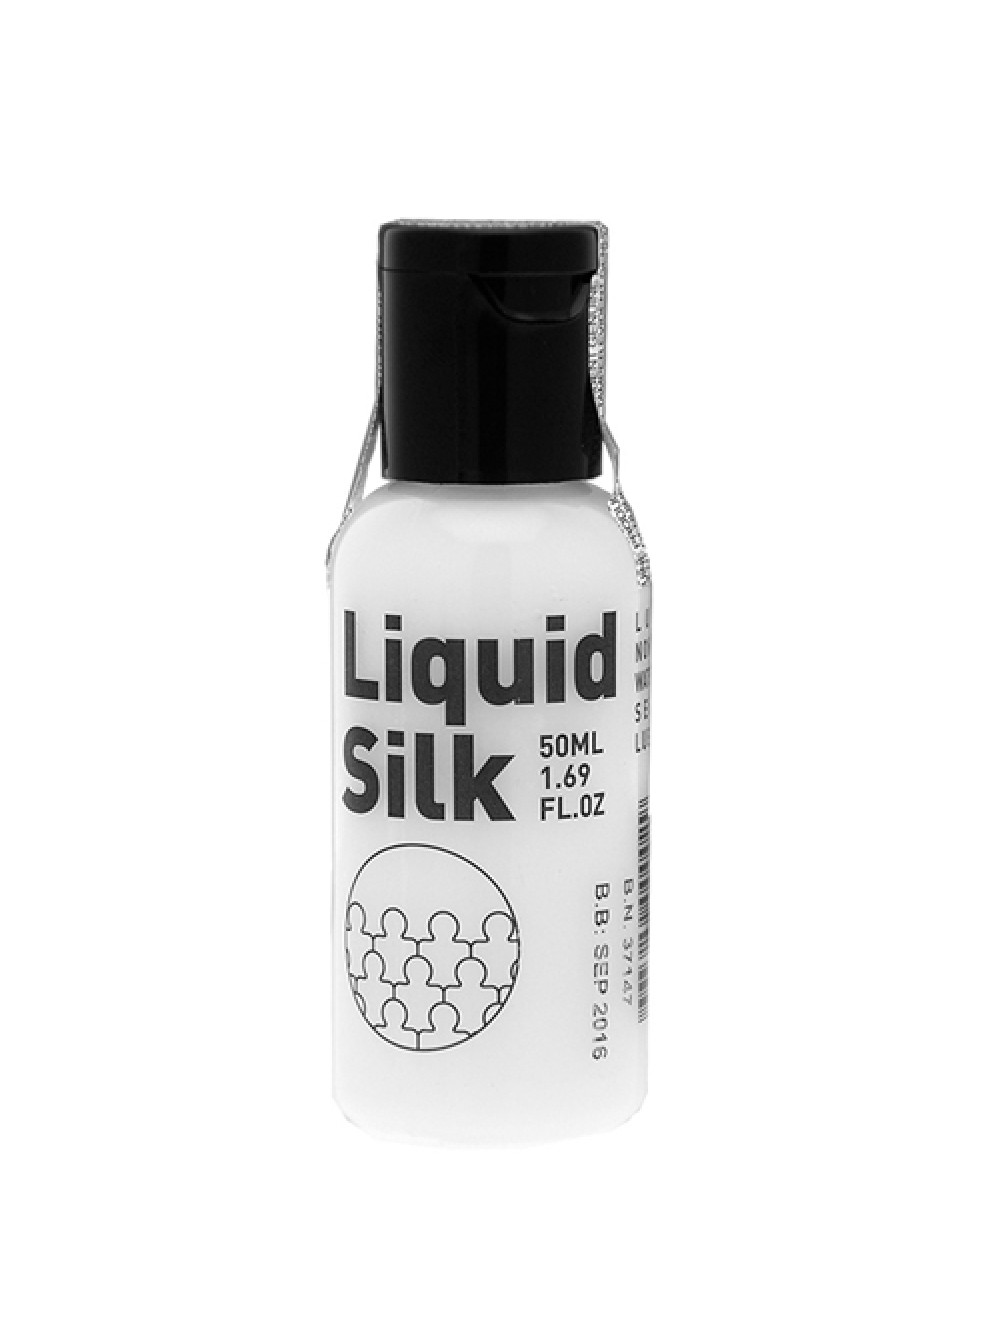 Liquid Silk Water Based Lubricant 50ML 663989000029